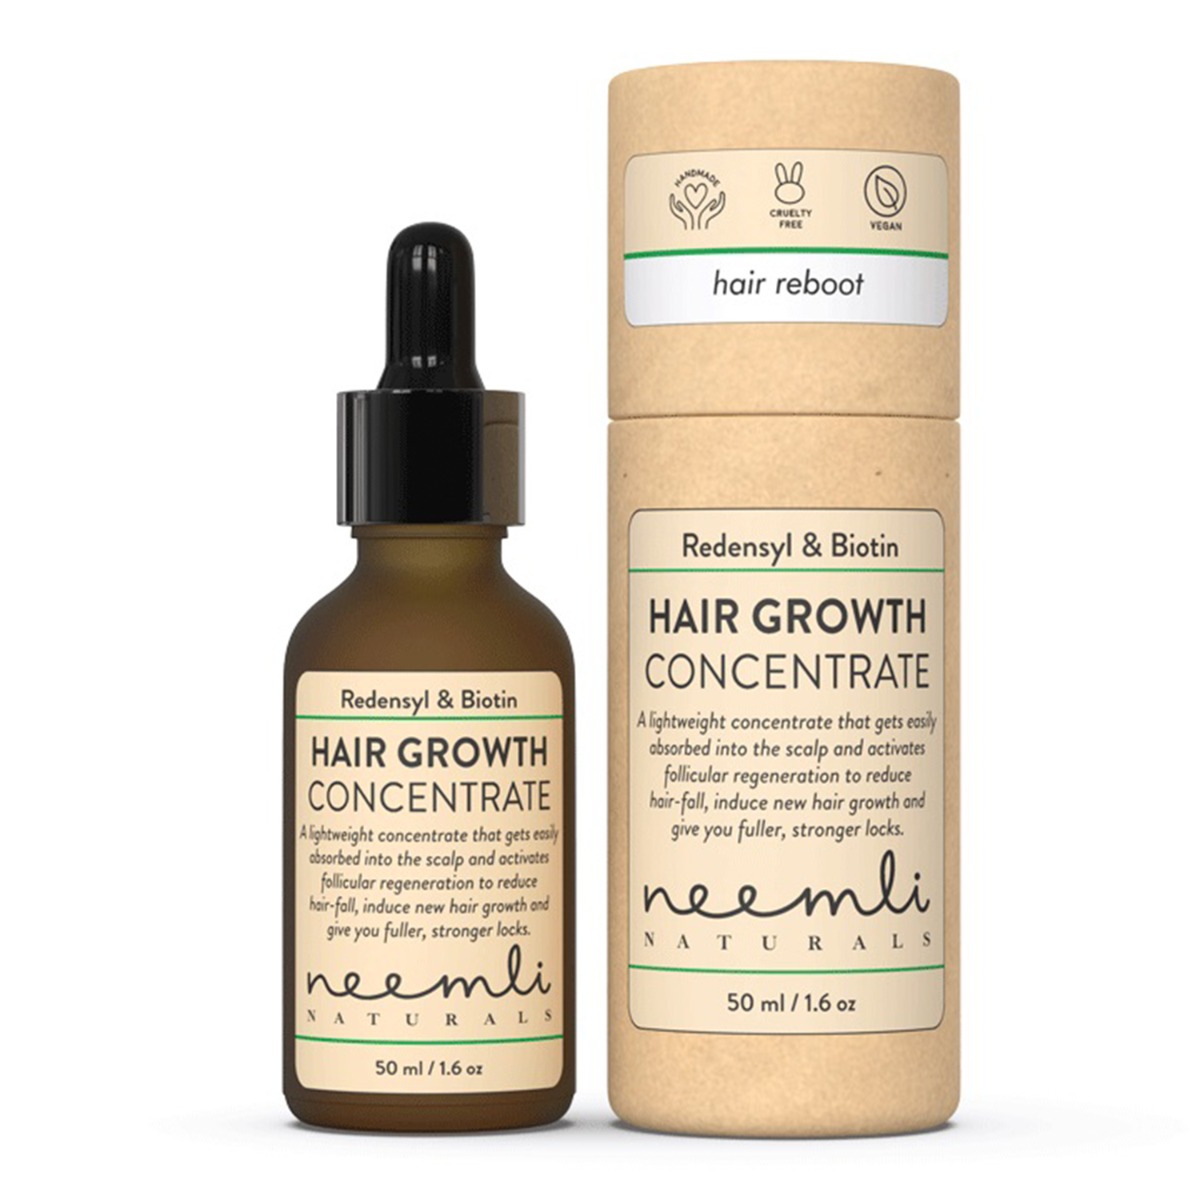 Neemli Naturals Redensyl & Biotin Hair Growth Concentrate, 50ml